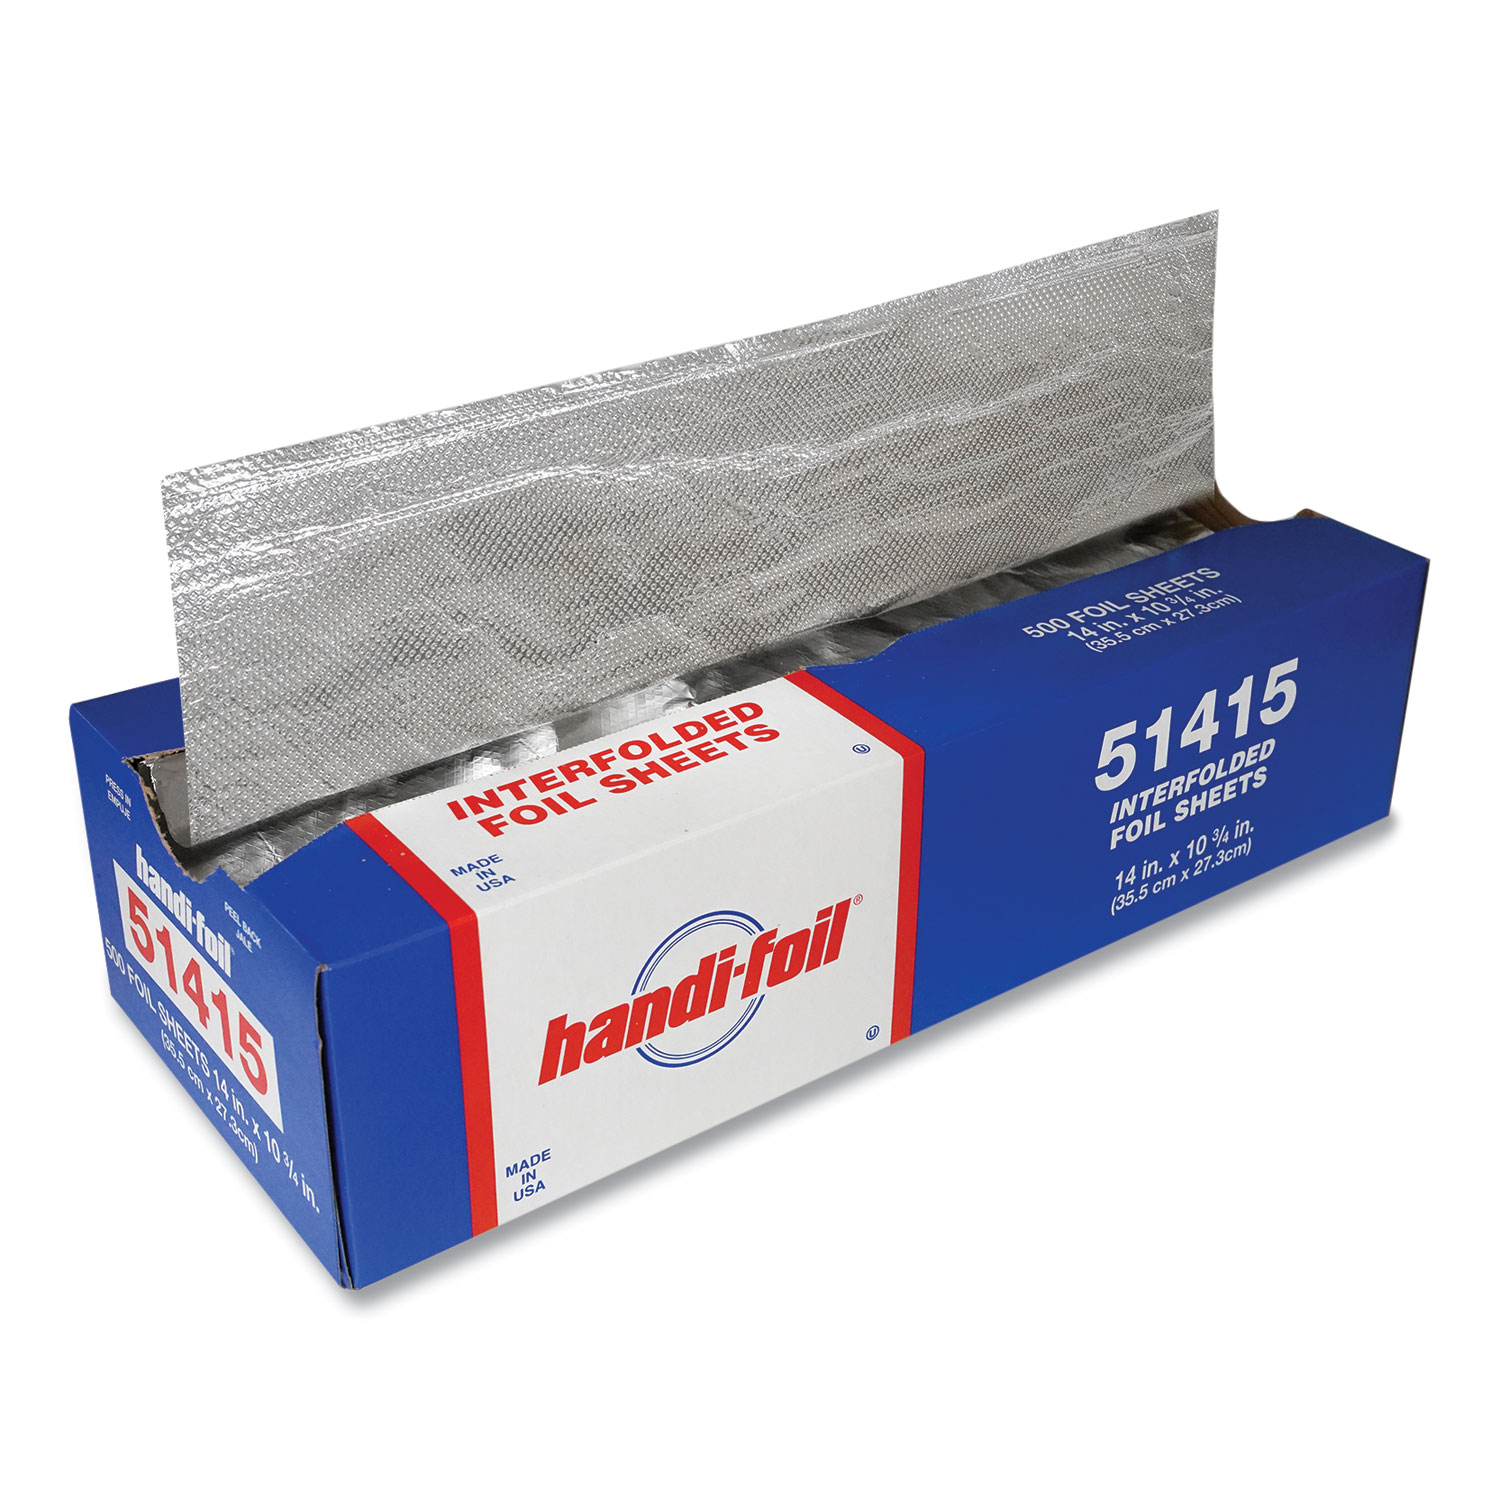 Handi-foil 51415 Interfolded Foil Sheets, 14 x 10.75, 6/Carton